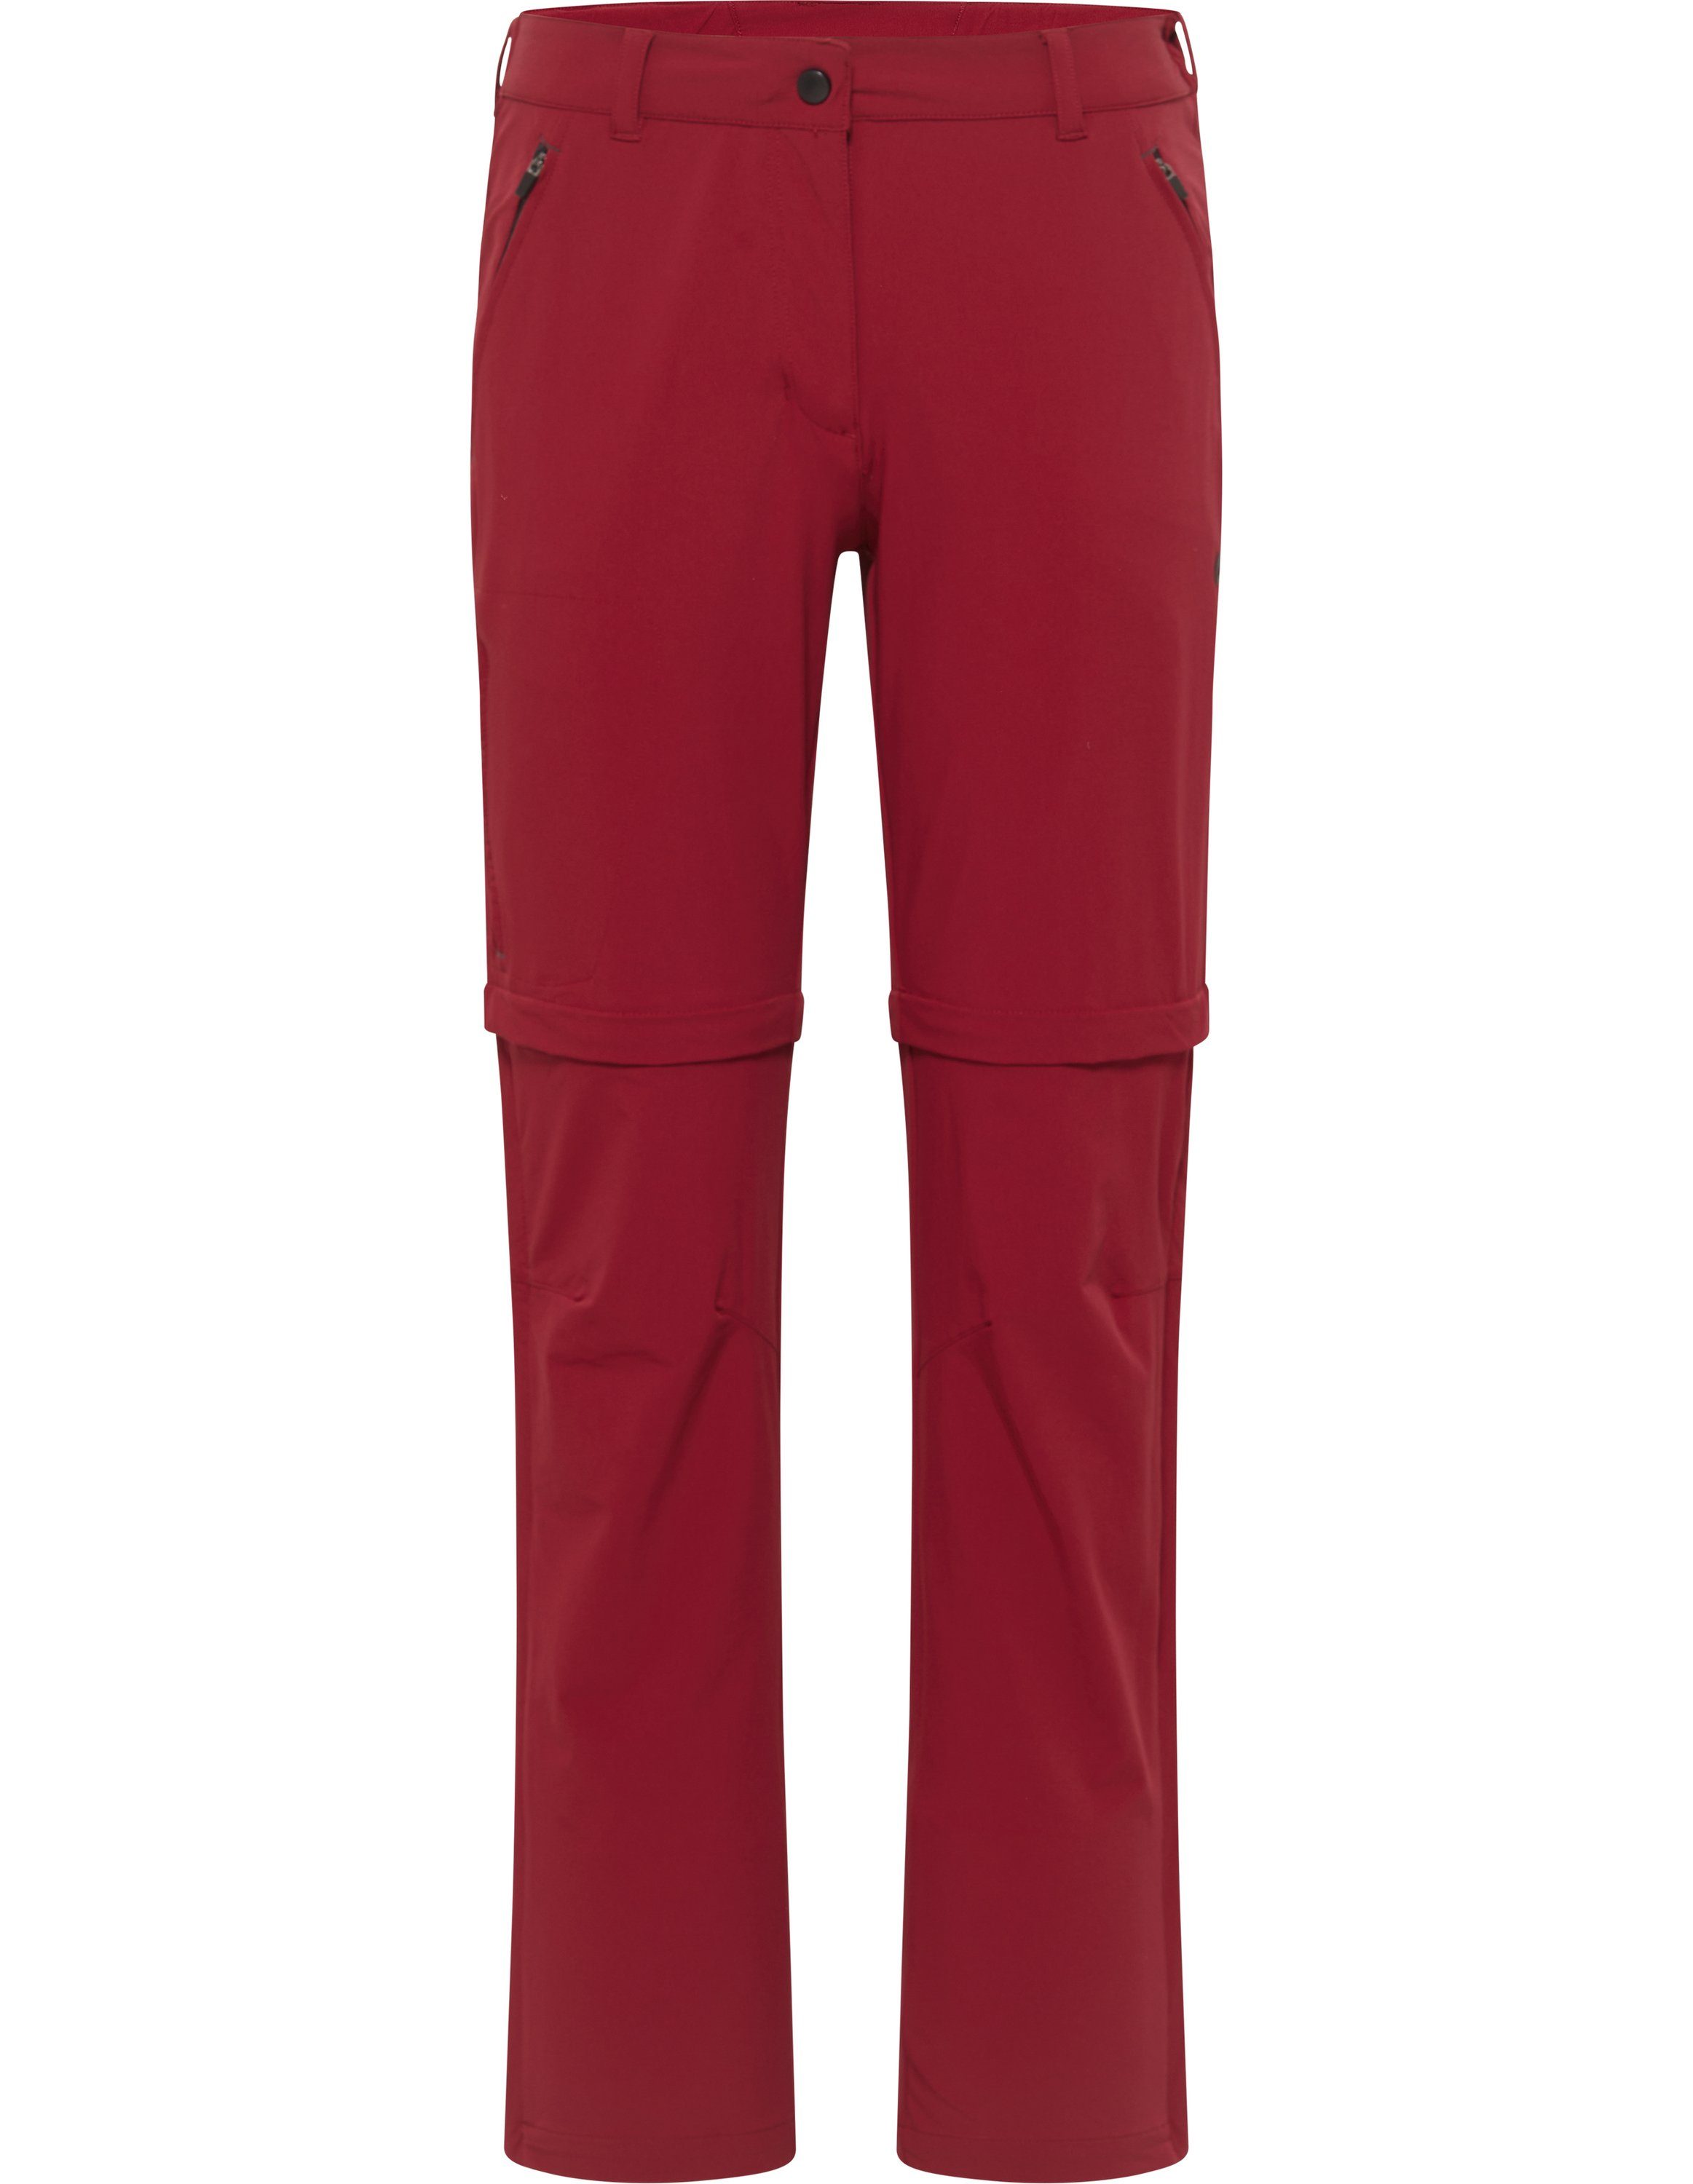 Hot-Sportswear Sporthose Hose Tofino crimson red